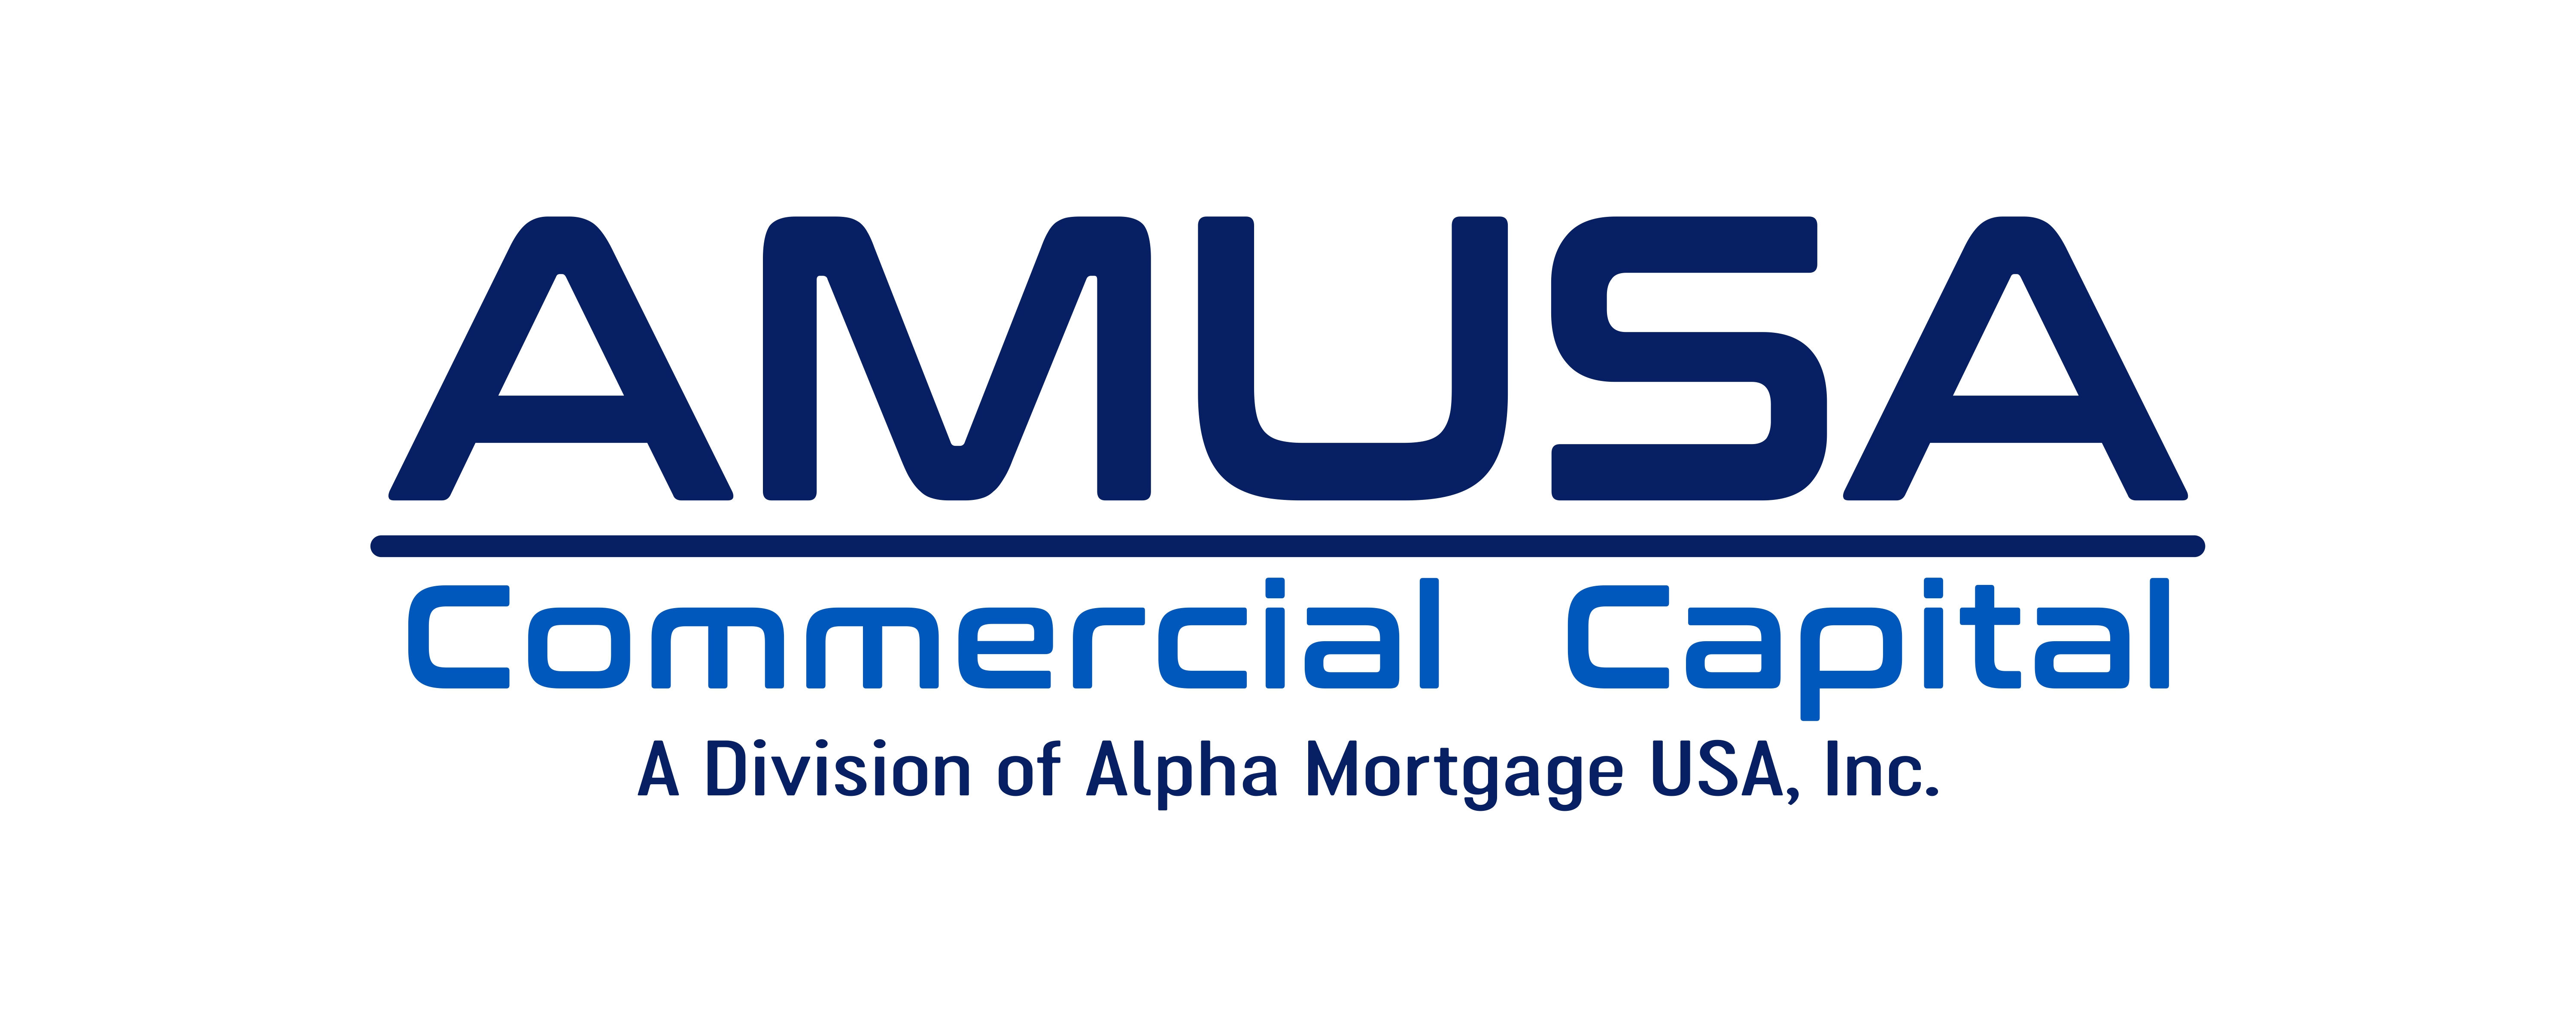 AMUSA Commercial Capital Logo